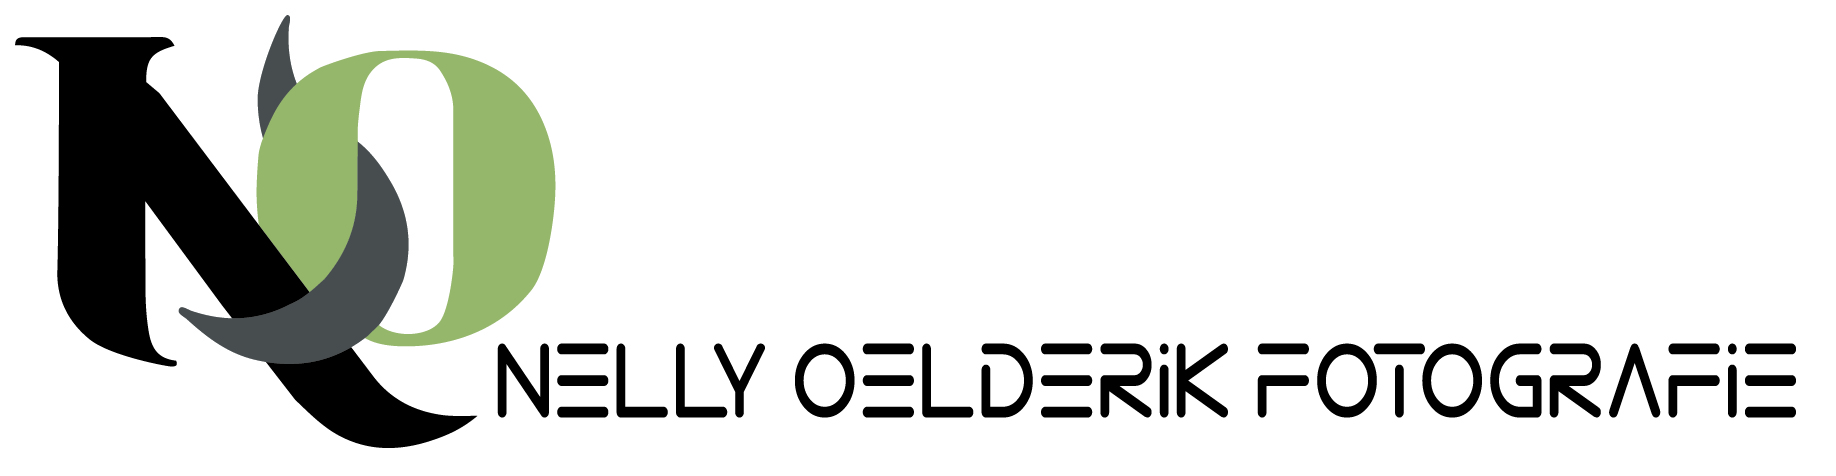 logo NellyOelderik